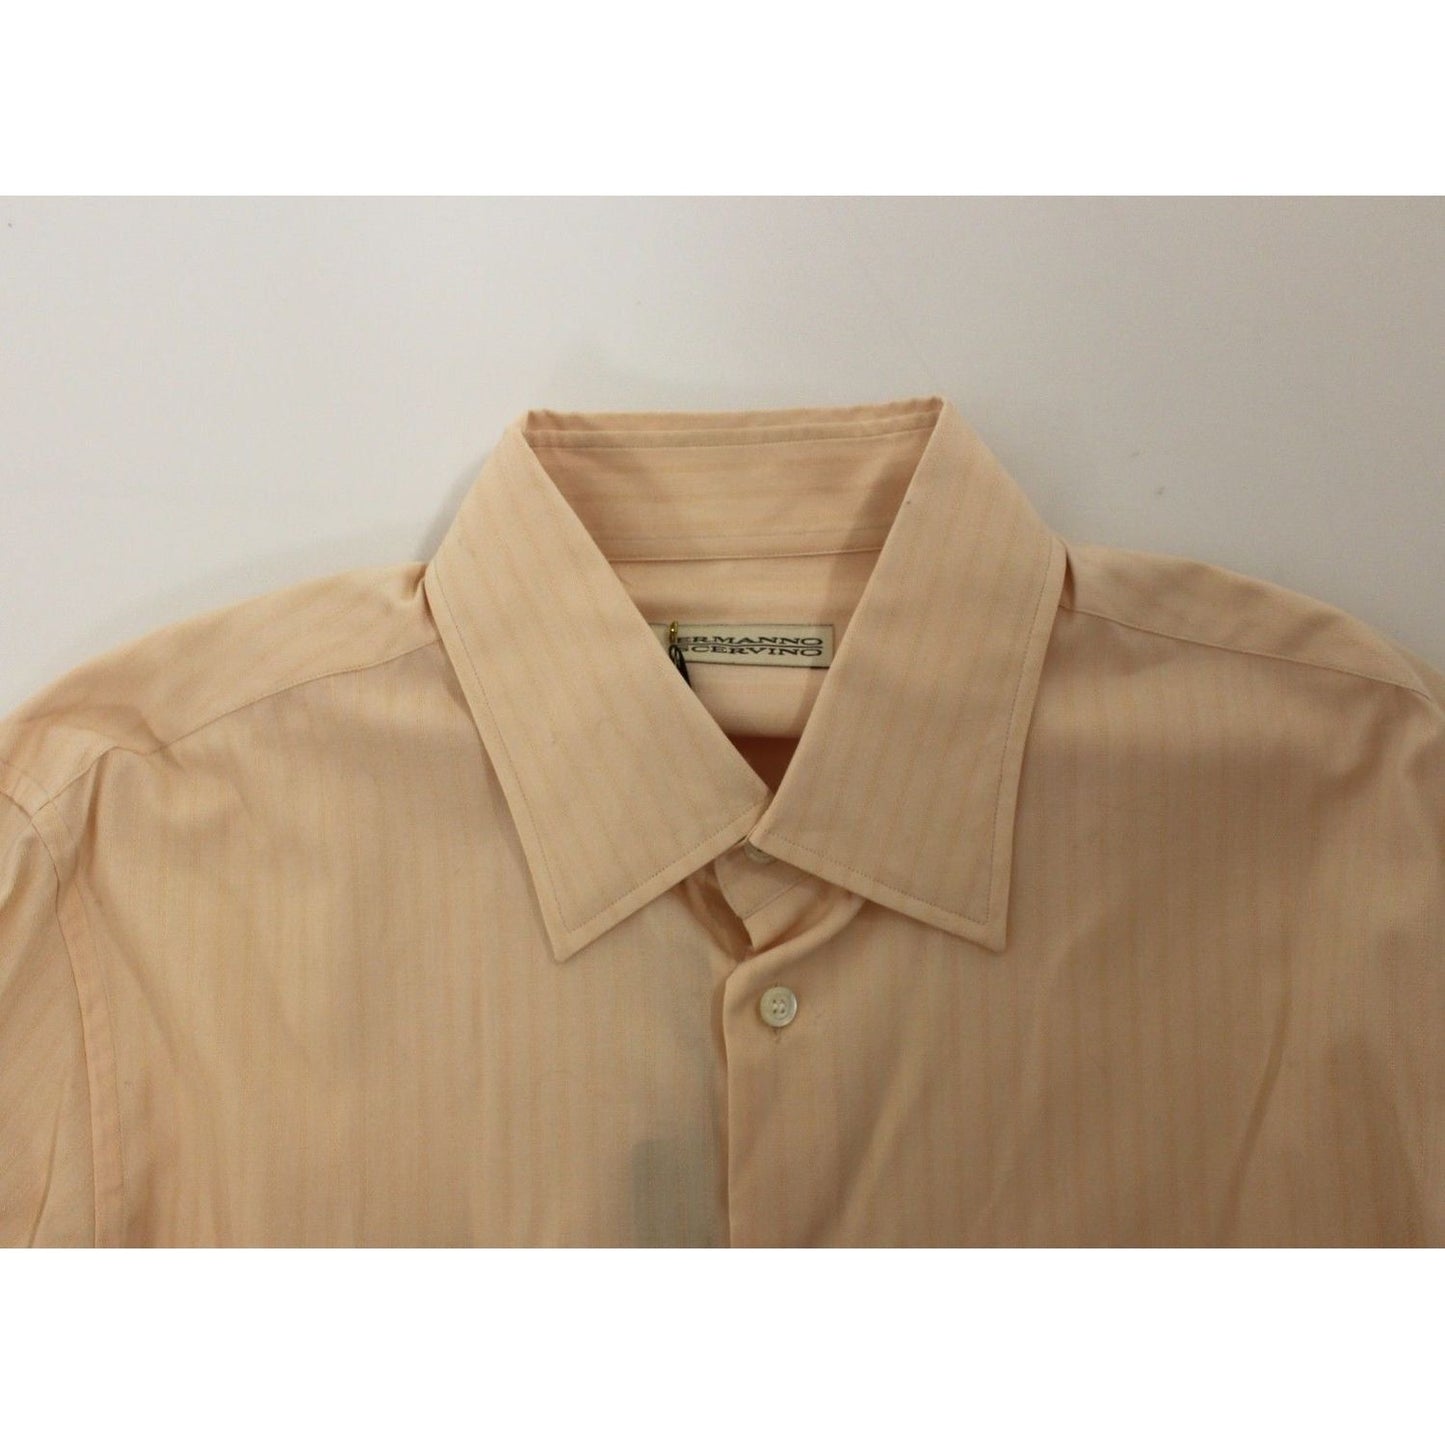 Ermanno Scervino Sunset Hues Striped Cotton Shirt orange-cotton-striped-casual-shirt-top 37697-orange-cotton-striped-casual-shirt-top-5.jpg